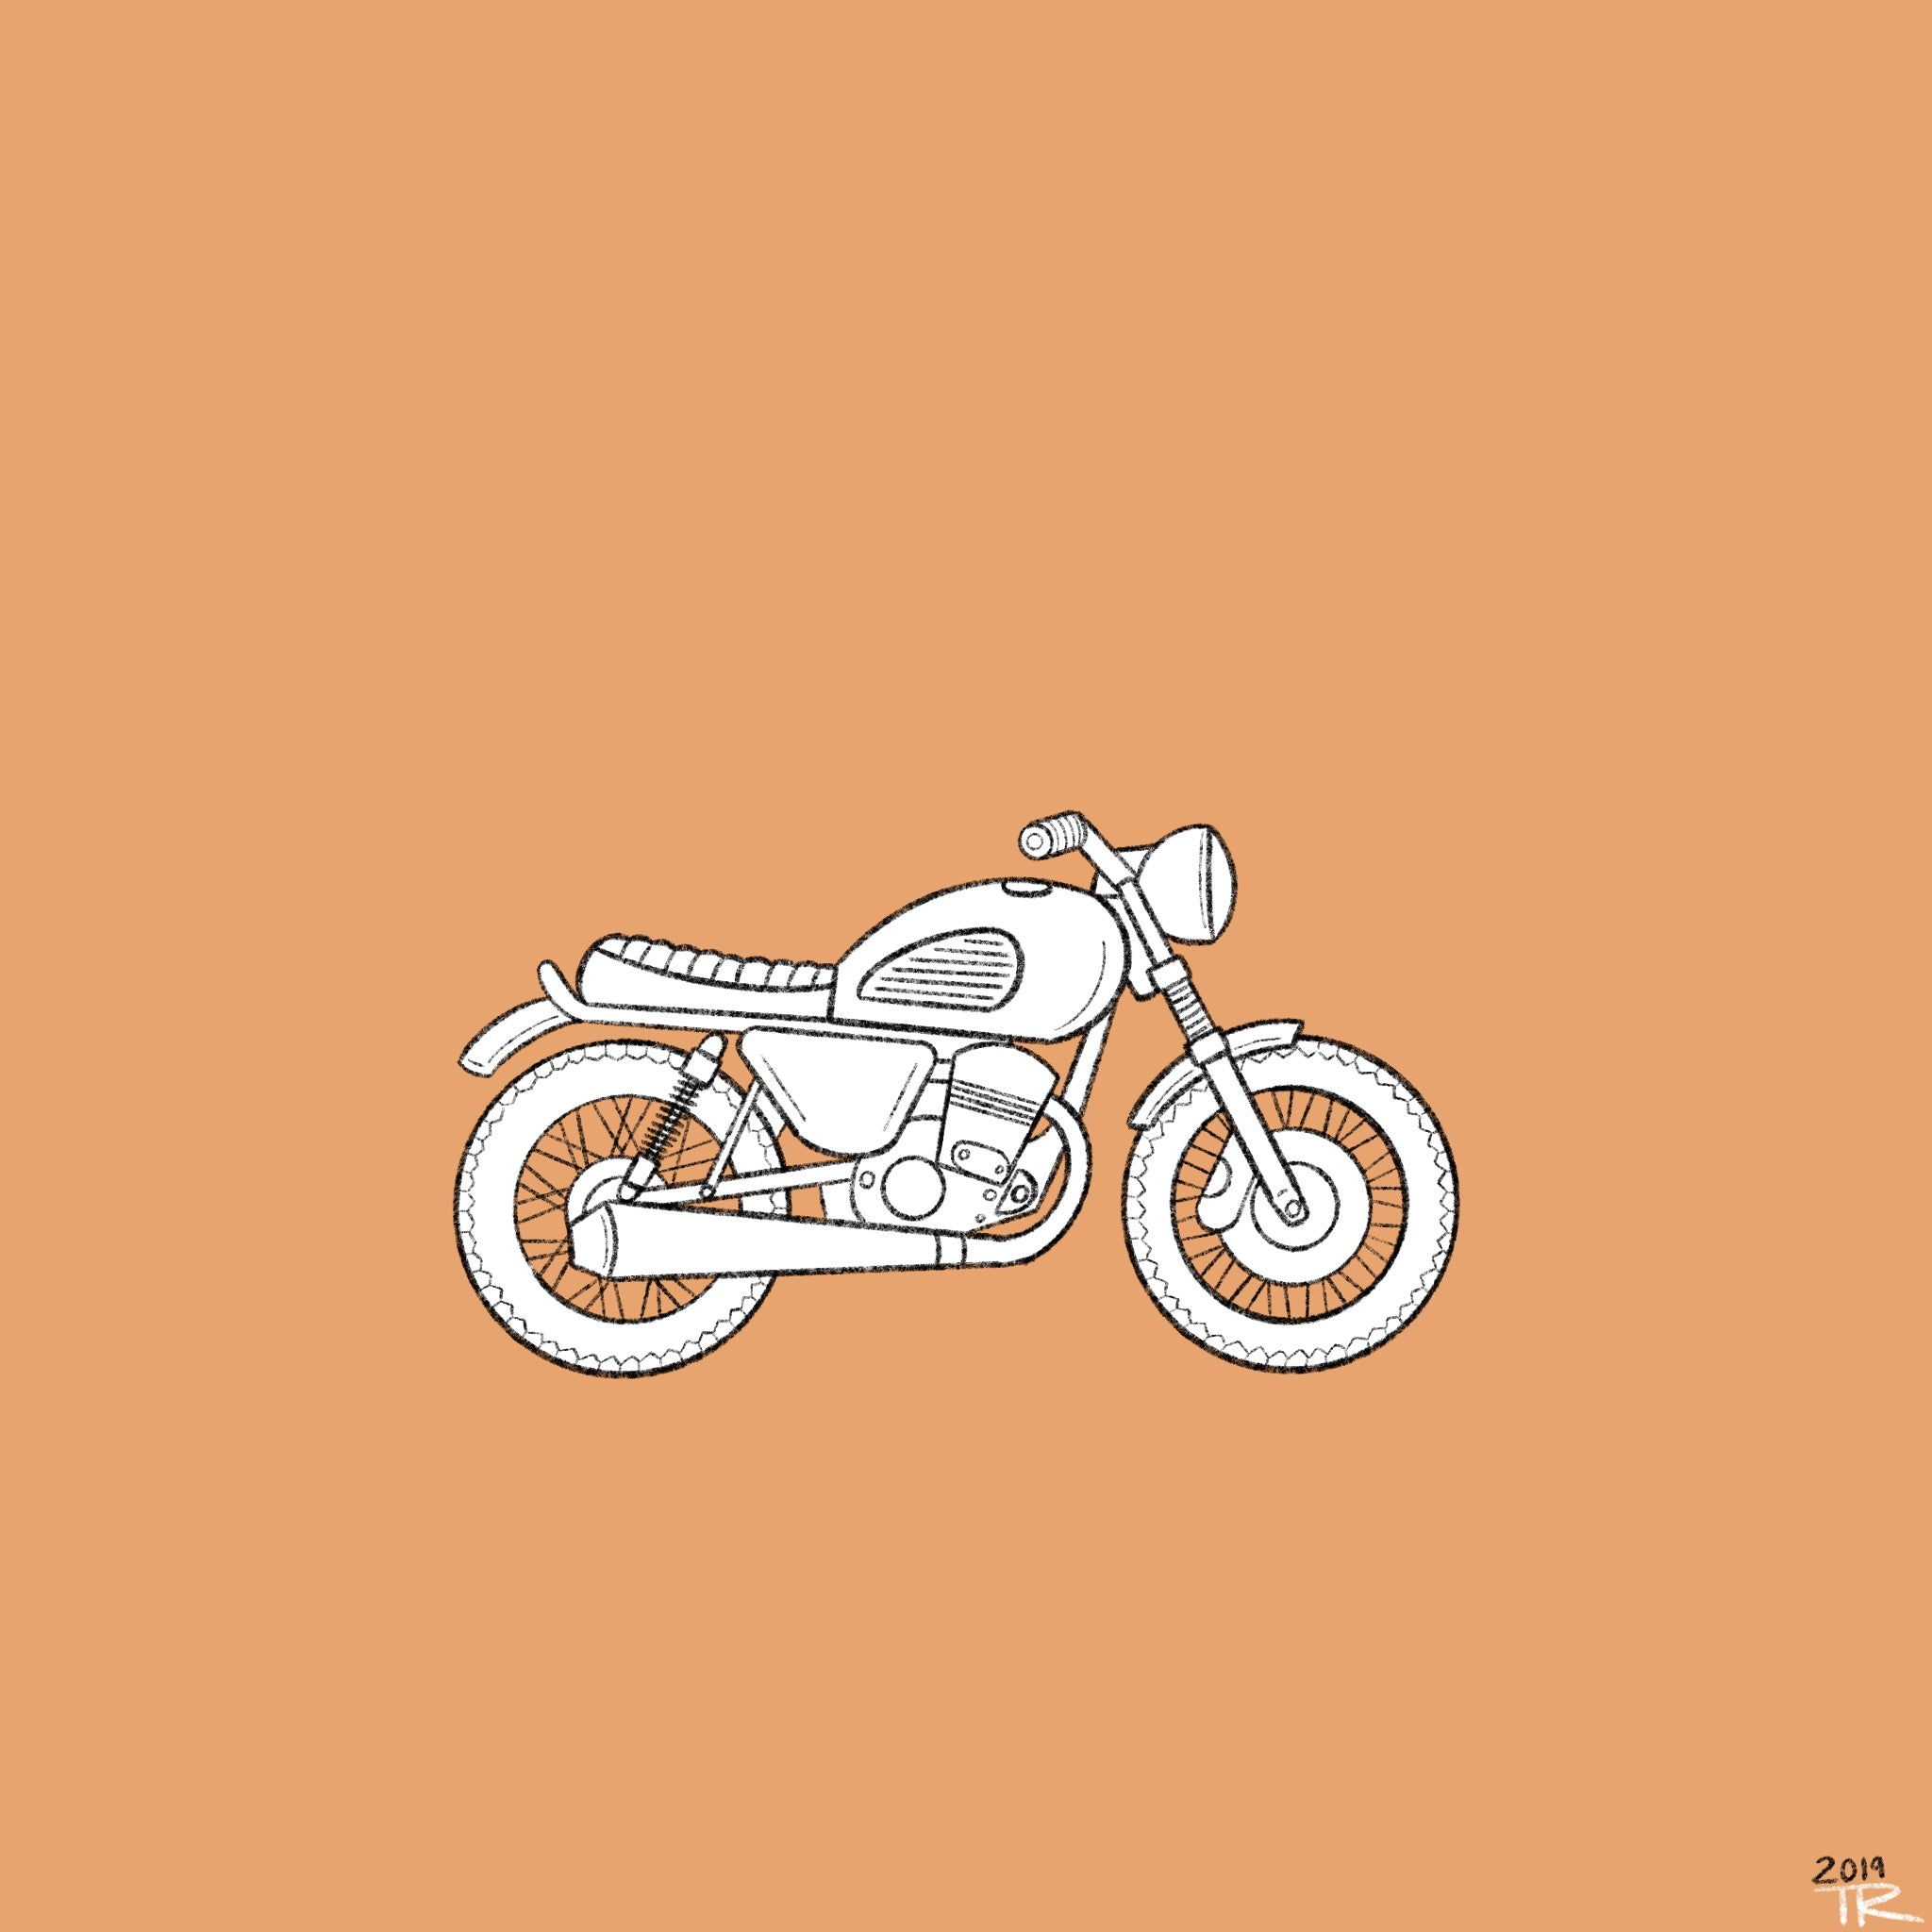 Mutt Motorcycle - Artwork - CreatedByTom